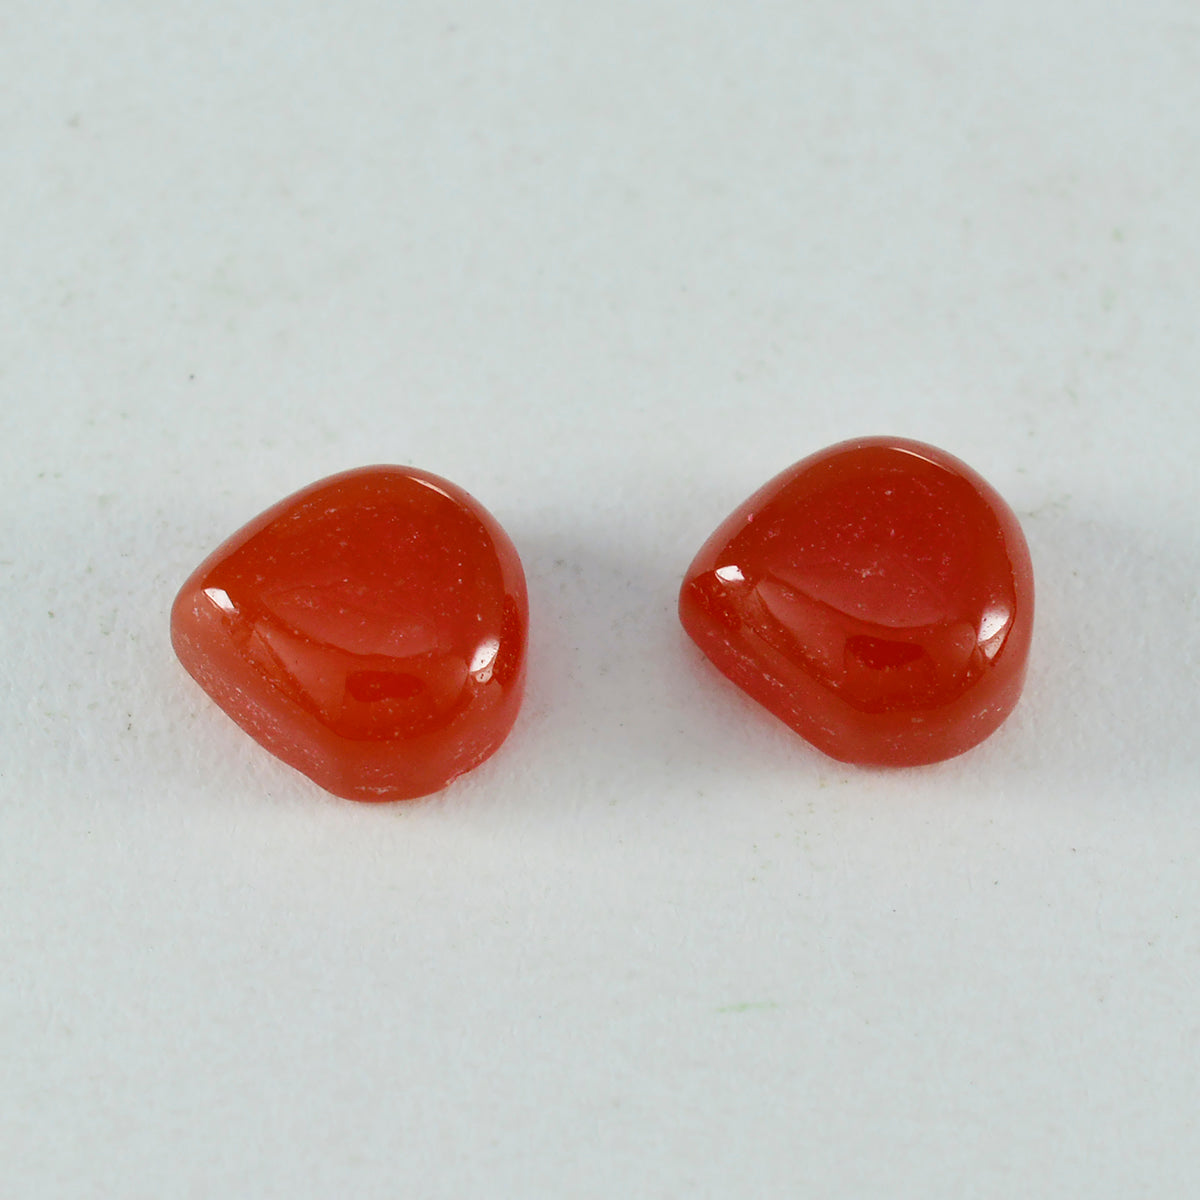 Riyogems 1PC Red Onyx Cabochon 13x13 mm Heart Shape astonishing Quality Loose Gemstone